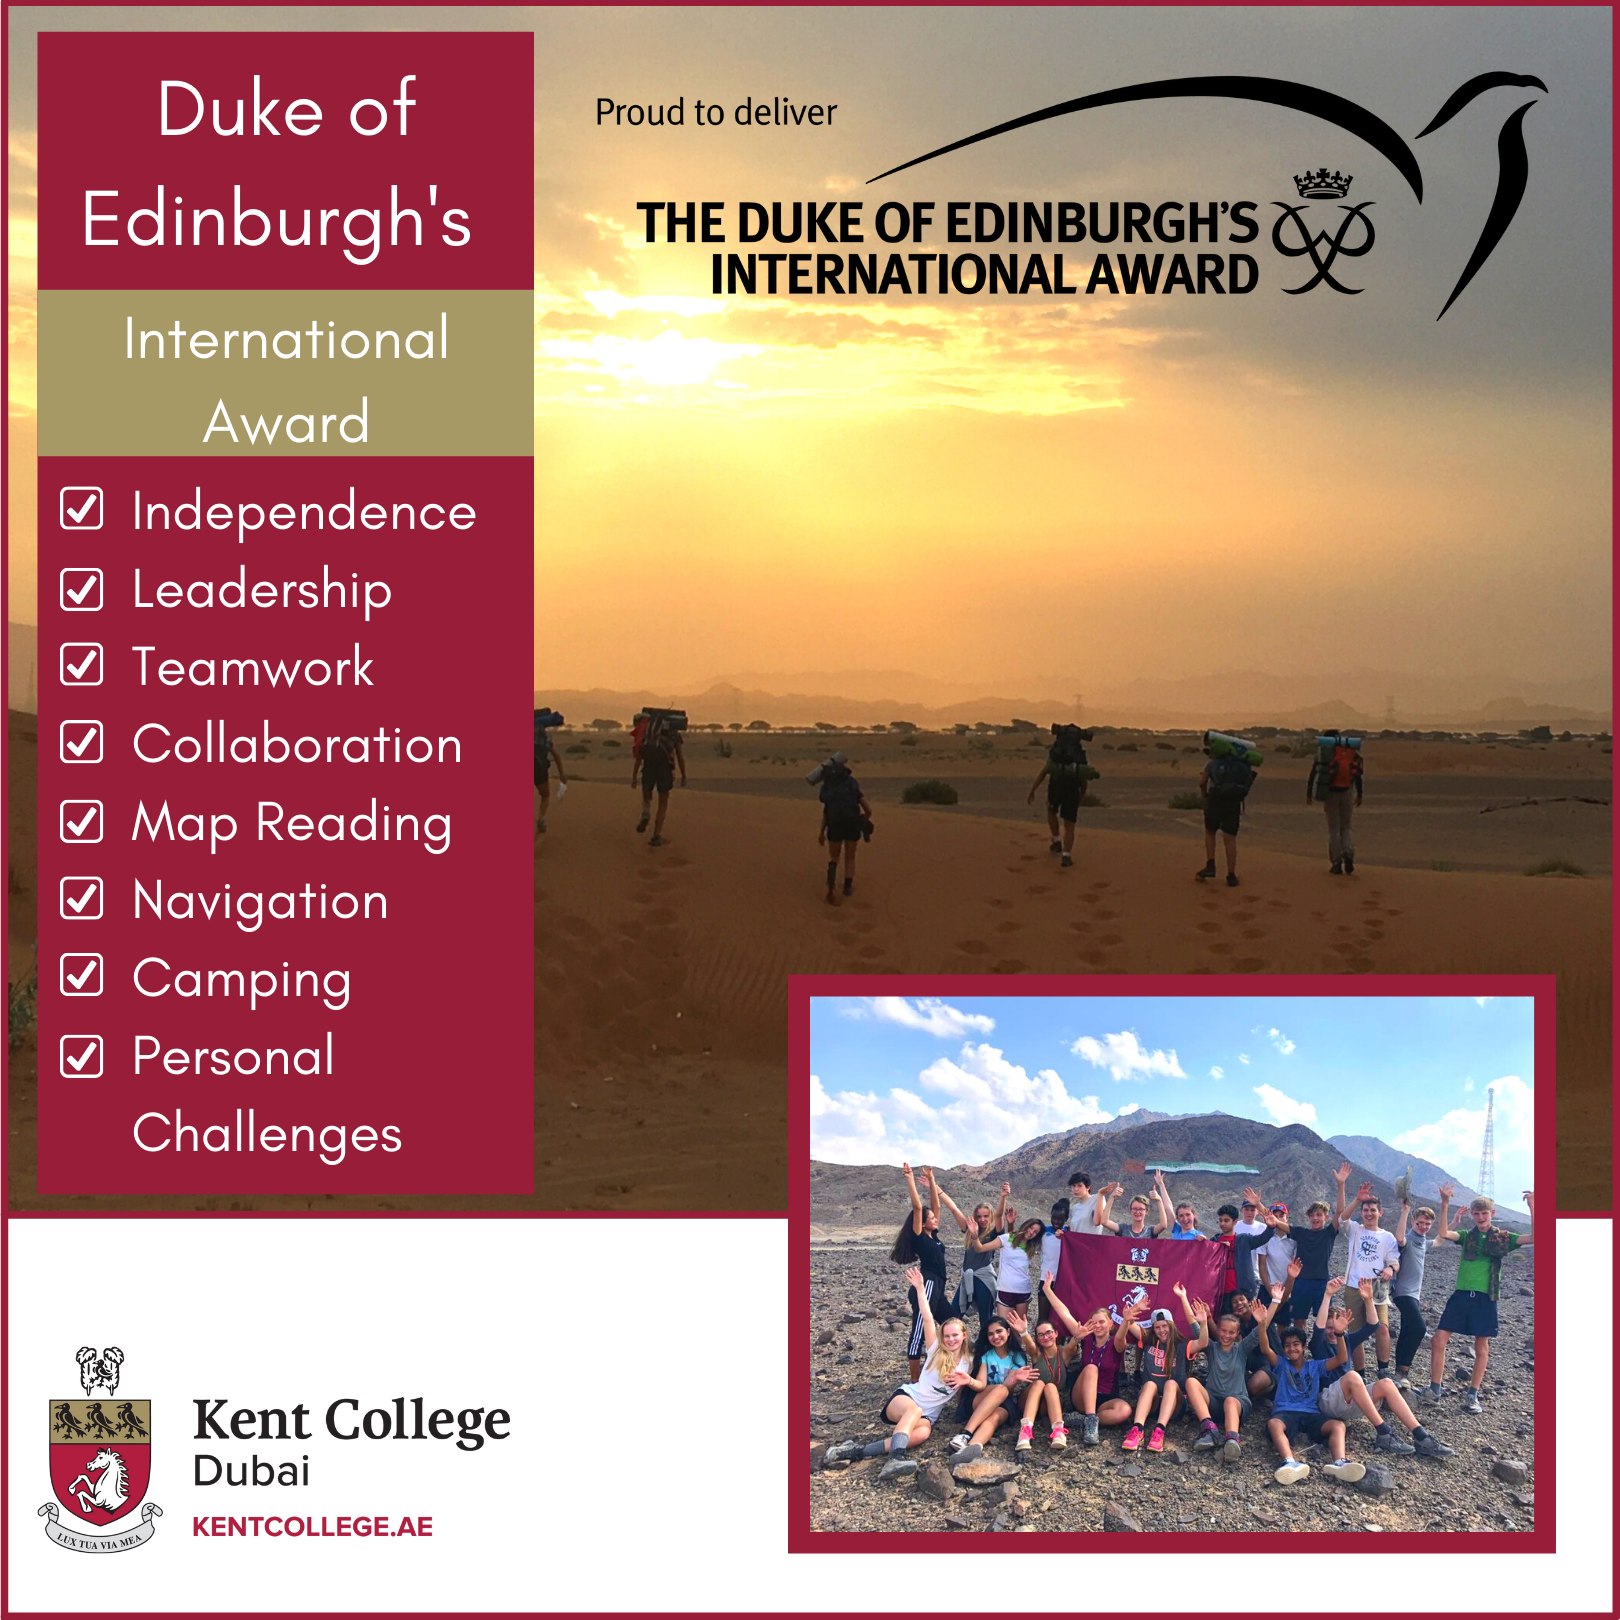 British schools overseas offers duke of edinburgh international award